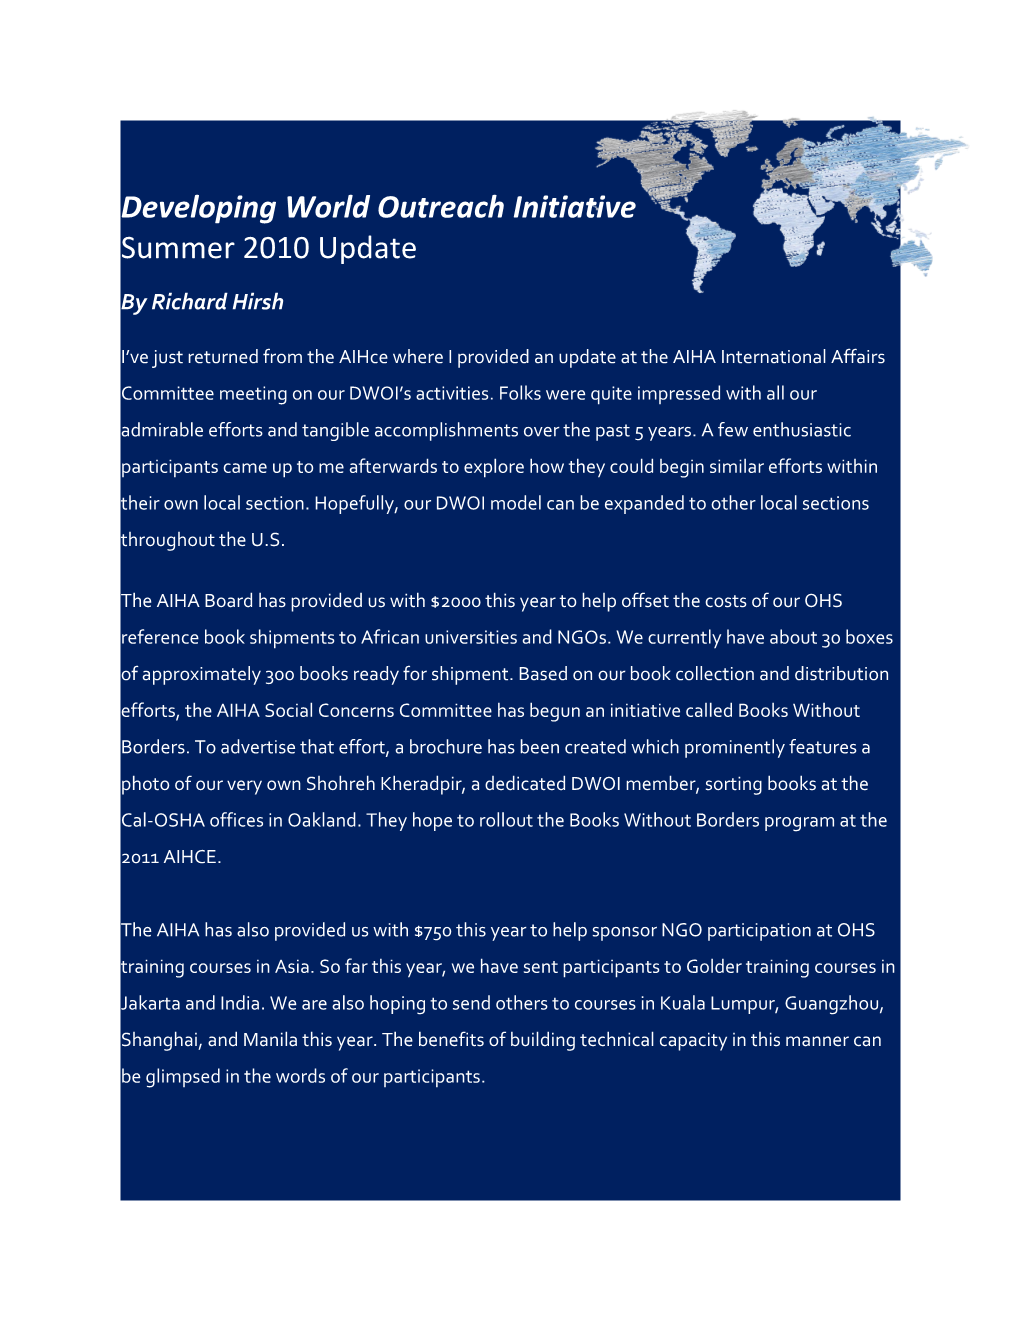 Developing World Outreach Initiative Update